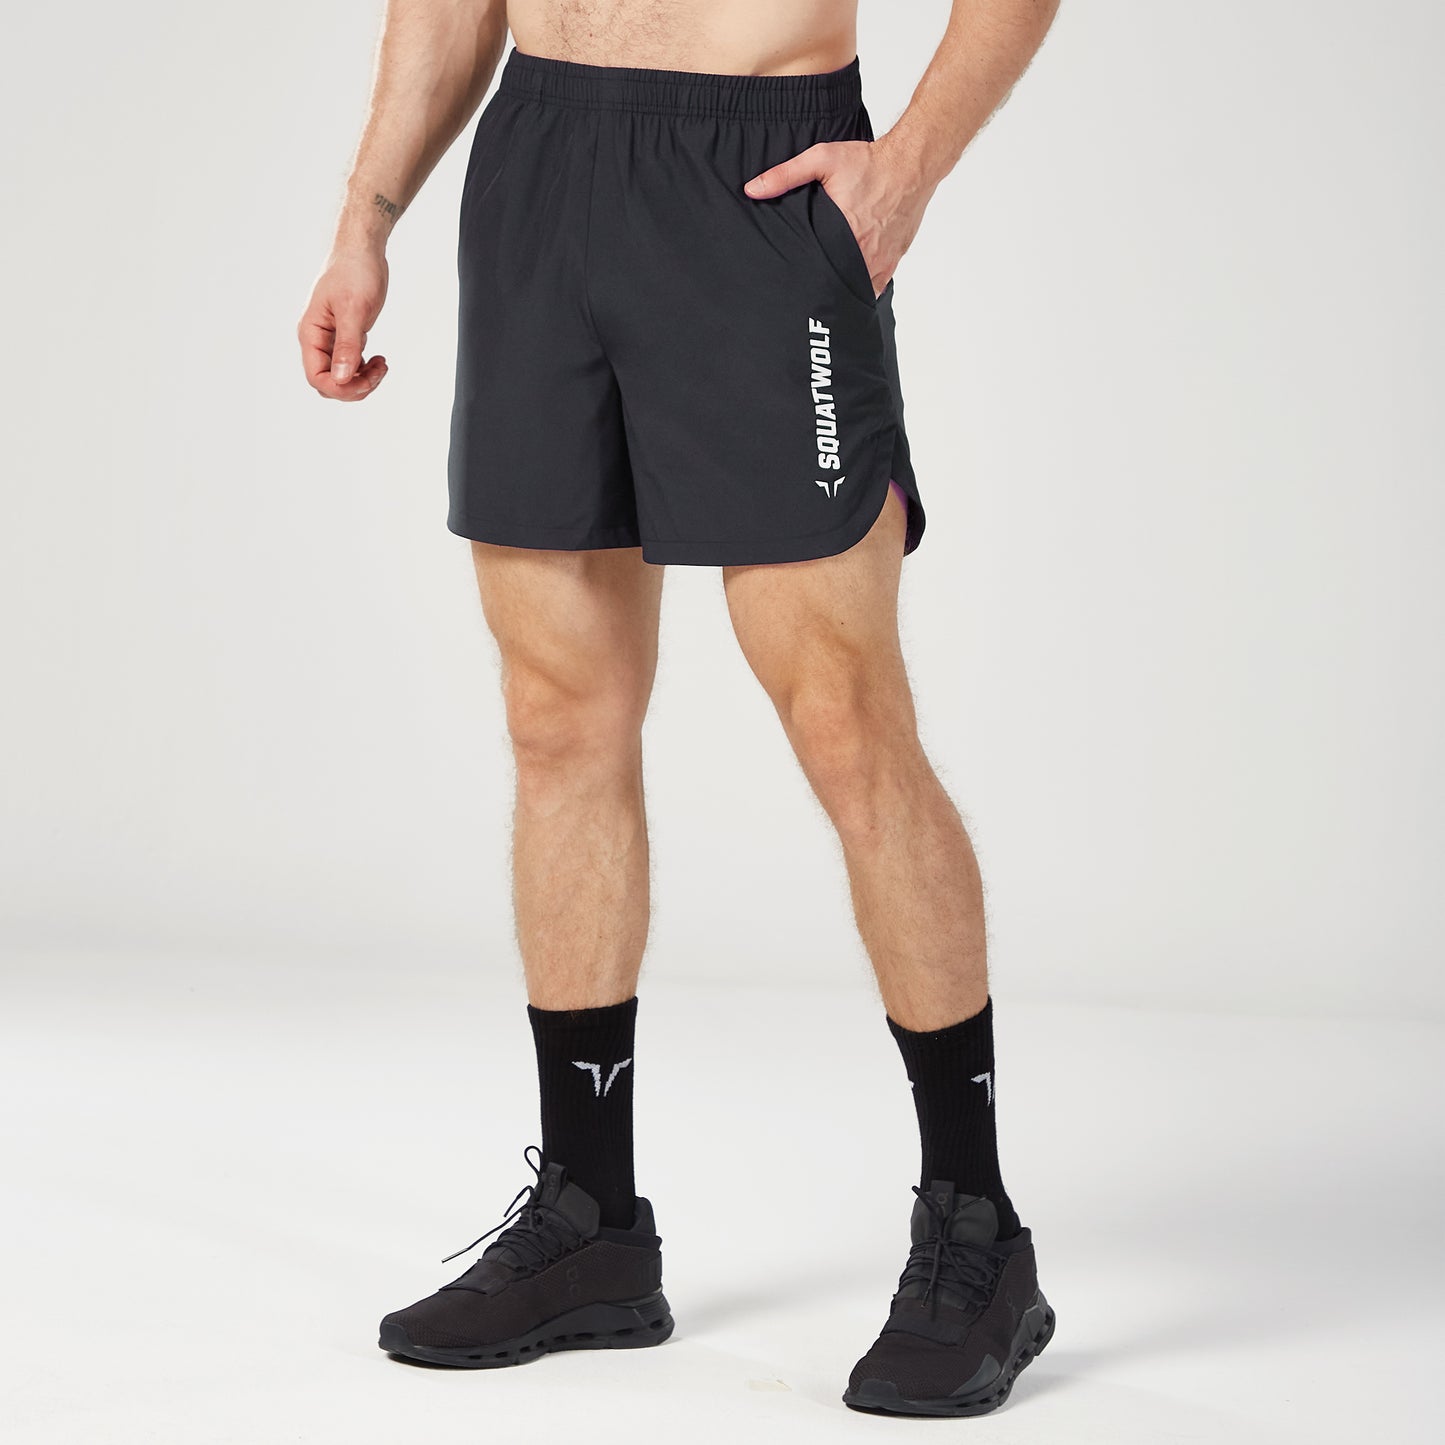 Warrior 5" Shorts 2.0 - Black